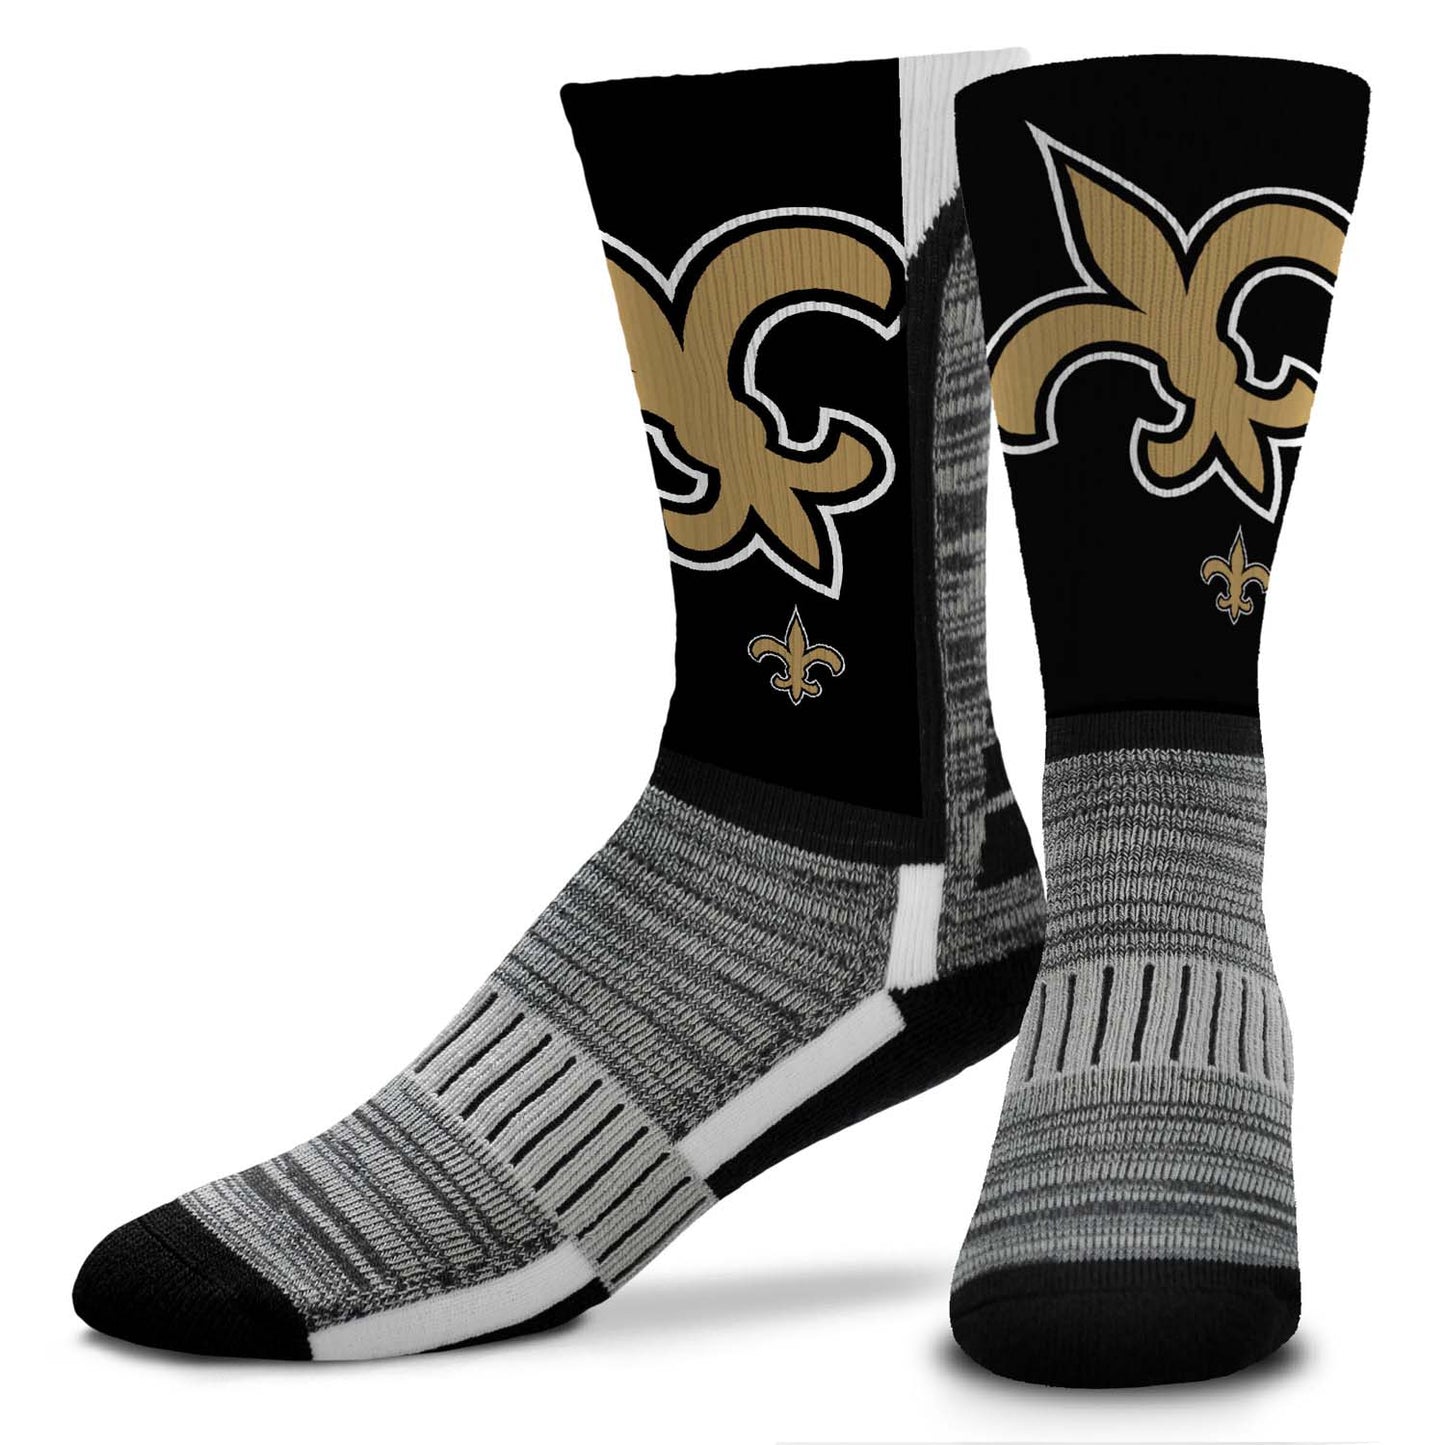 New Orleans Saints NFL Adult Curve Socks - Black